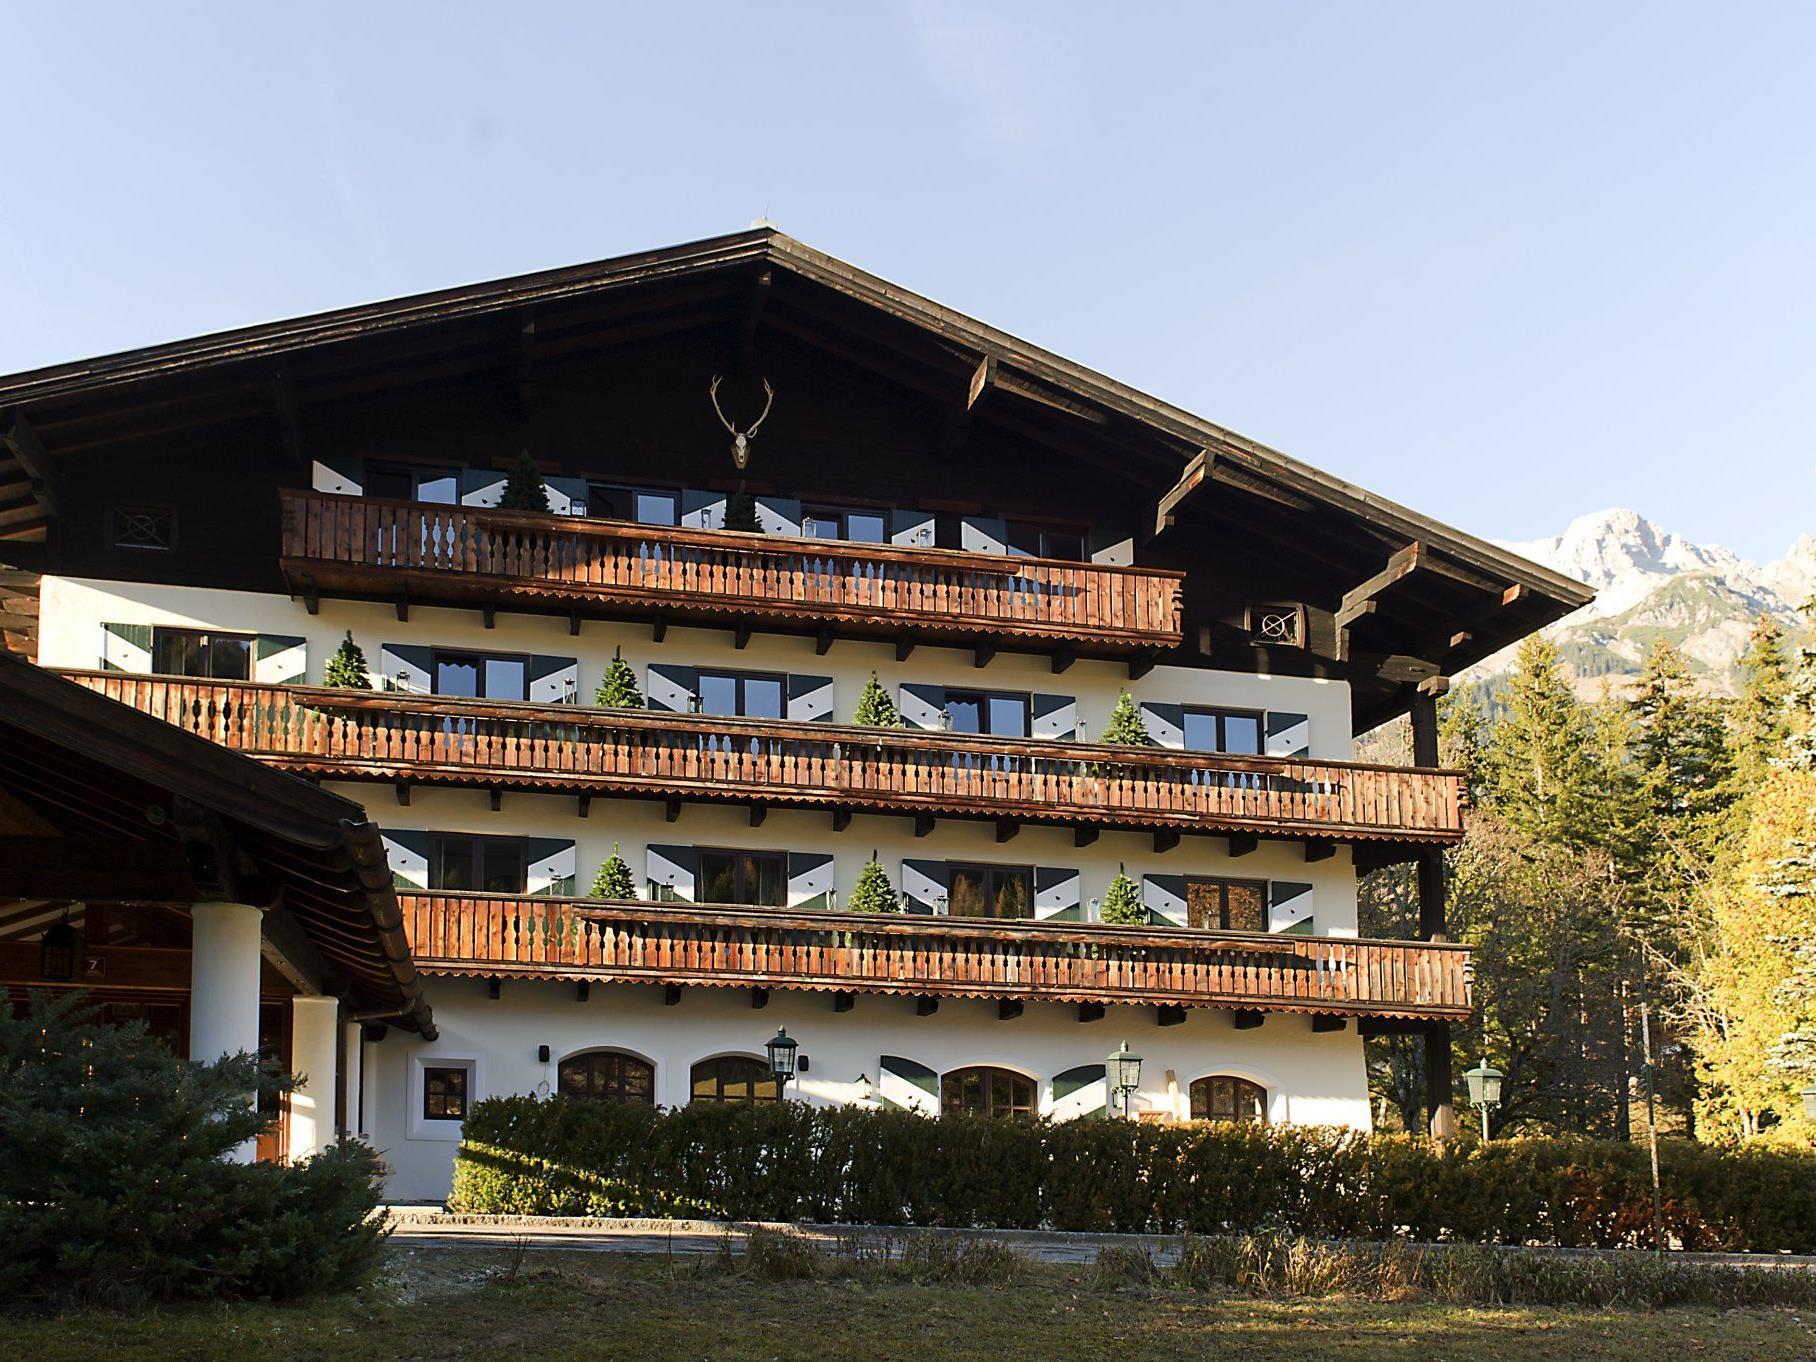 Hotel "Jagdgut Wachtelhof" in Hinterthal